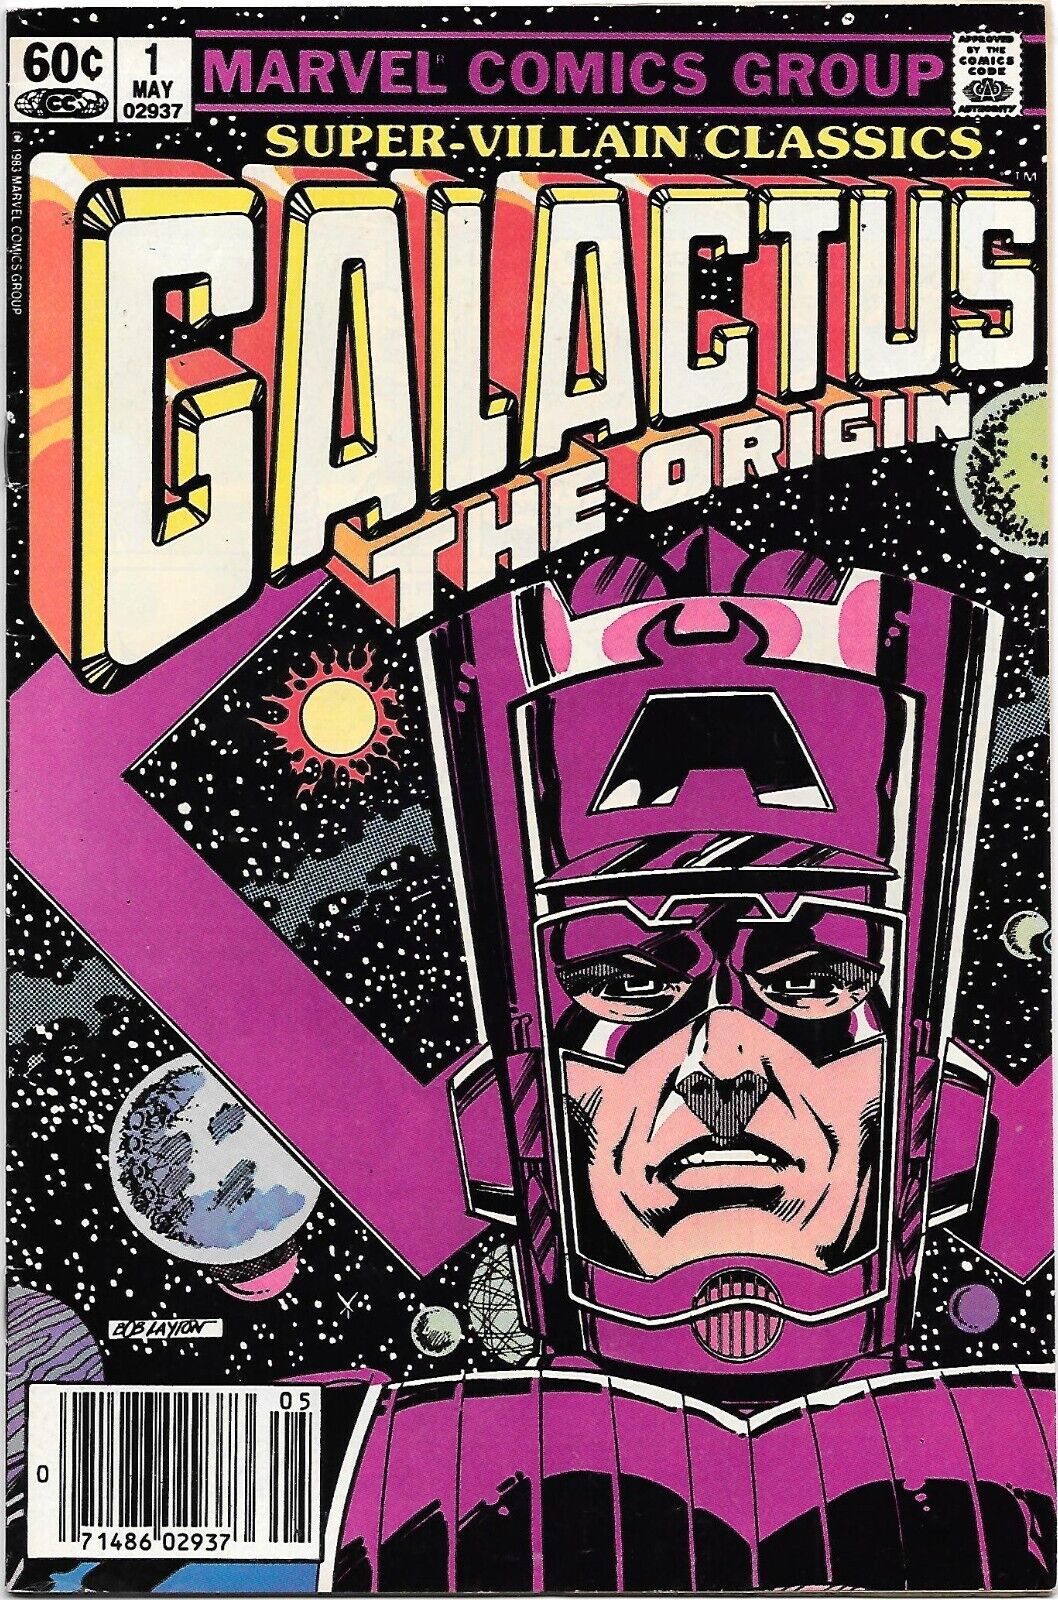 Super Villain Classics Galactus The origin #1 1983 Newsstand Edition